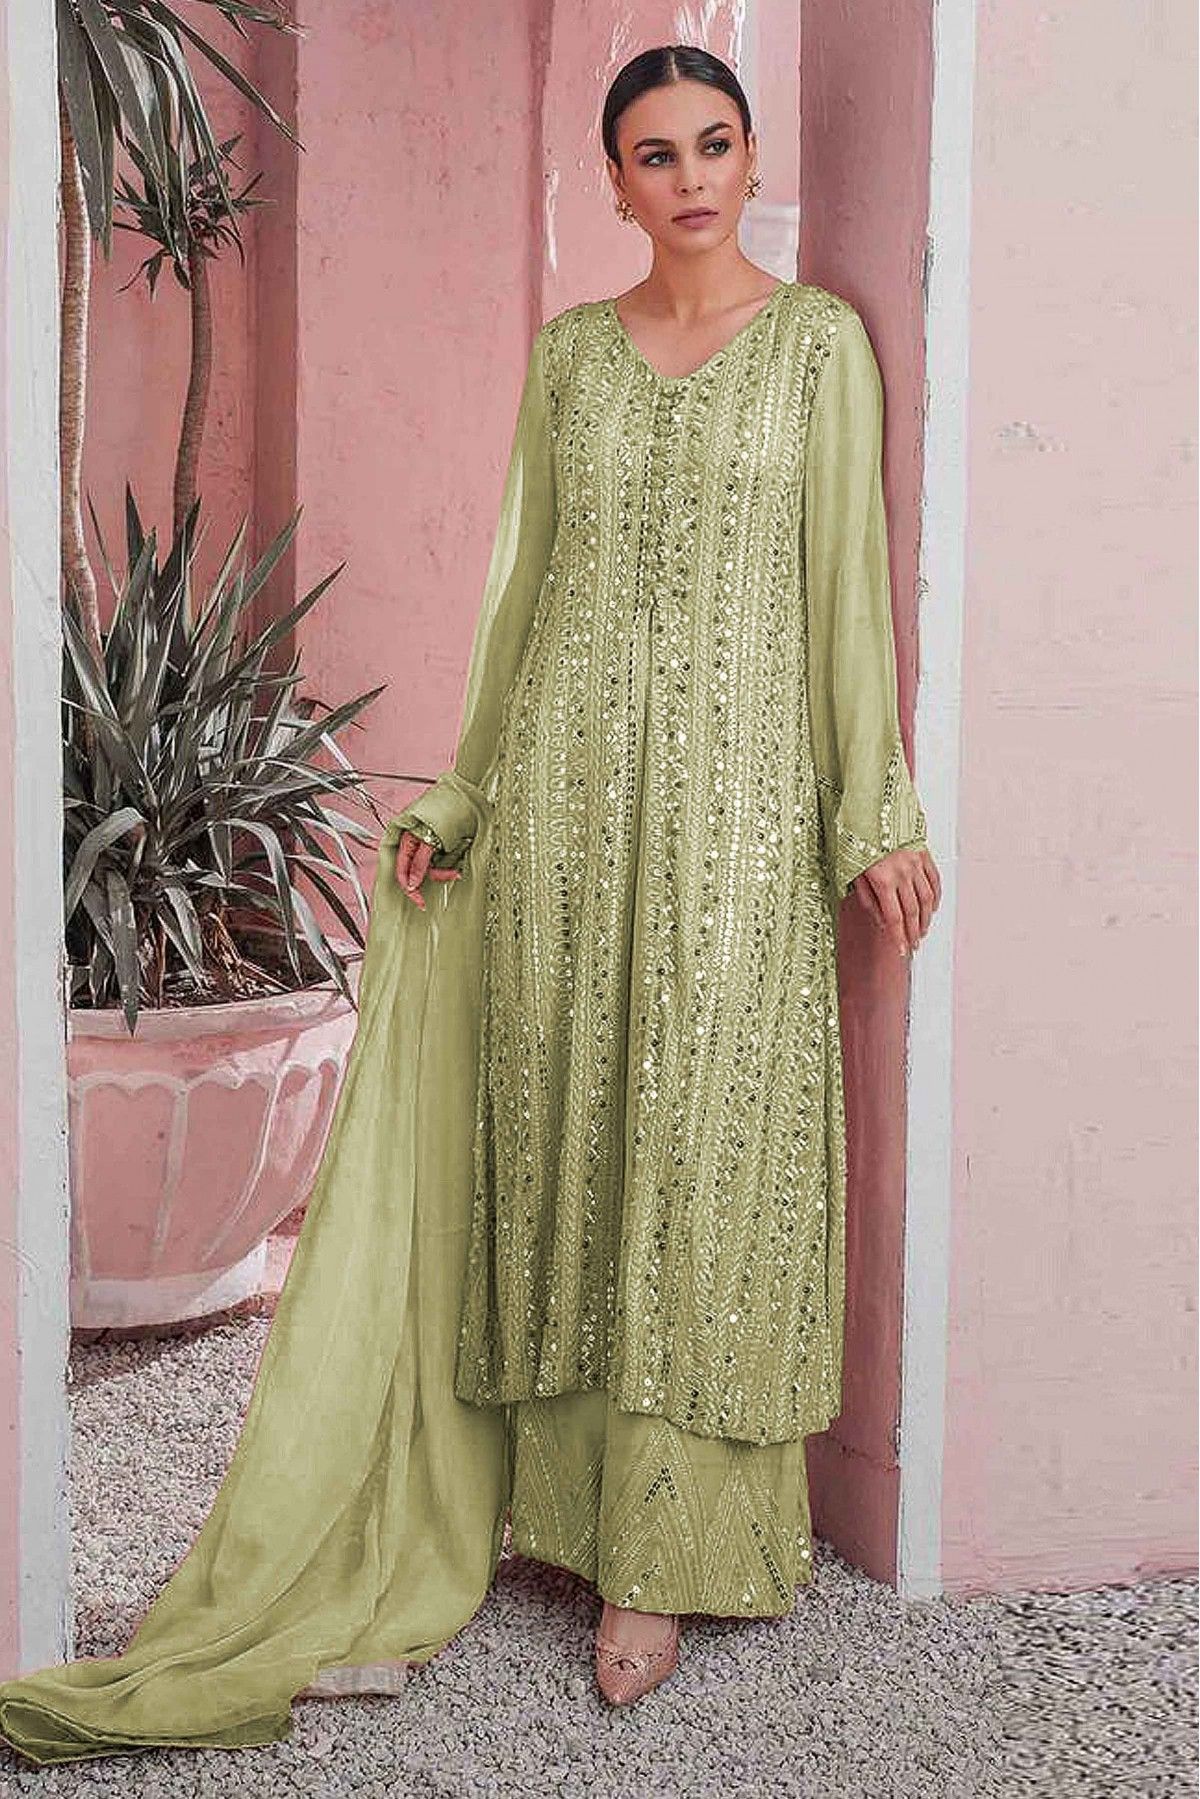 Georgette pakistani suit in Pista green colour 161330